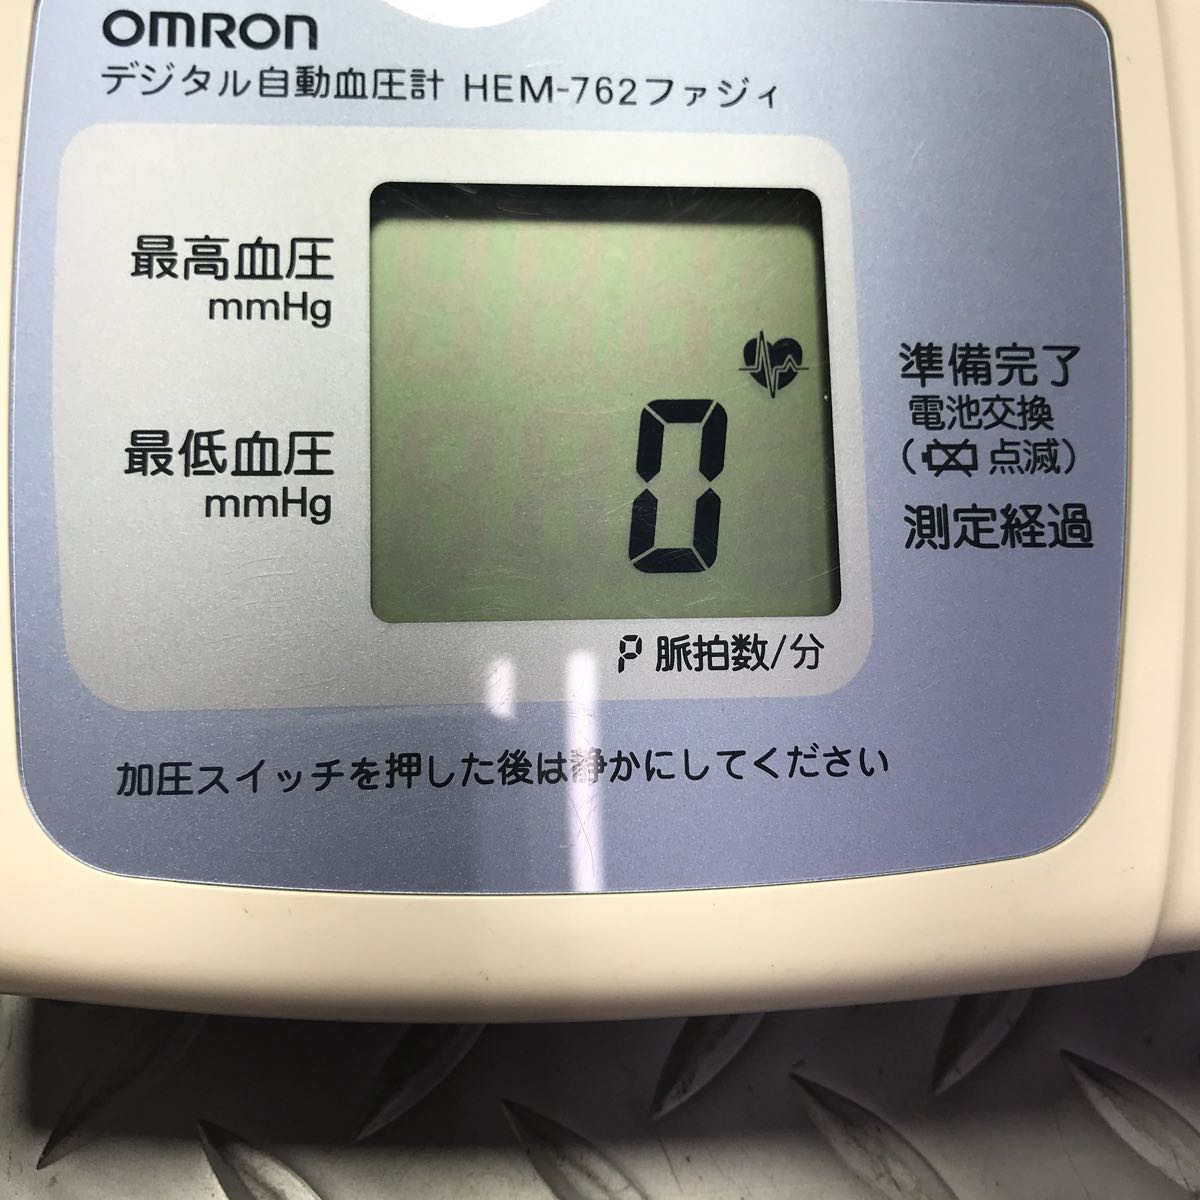 TAD7387 OMRON Omron digital automatic hemadynamometer HEM-762faji. Intell sense hemadynamometer most high blood pressure error part removing. person please 